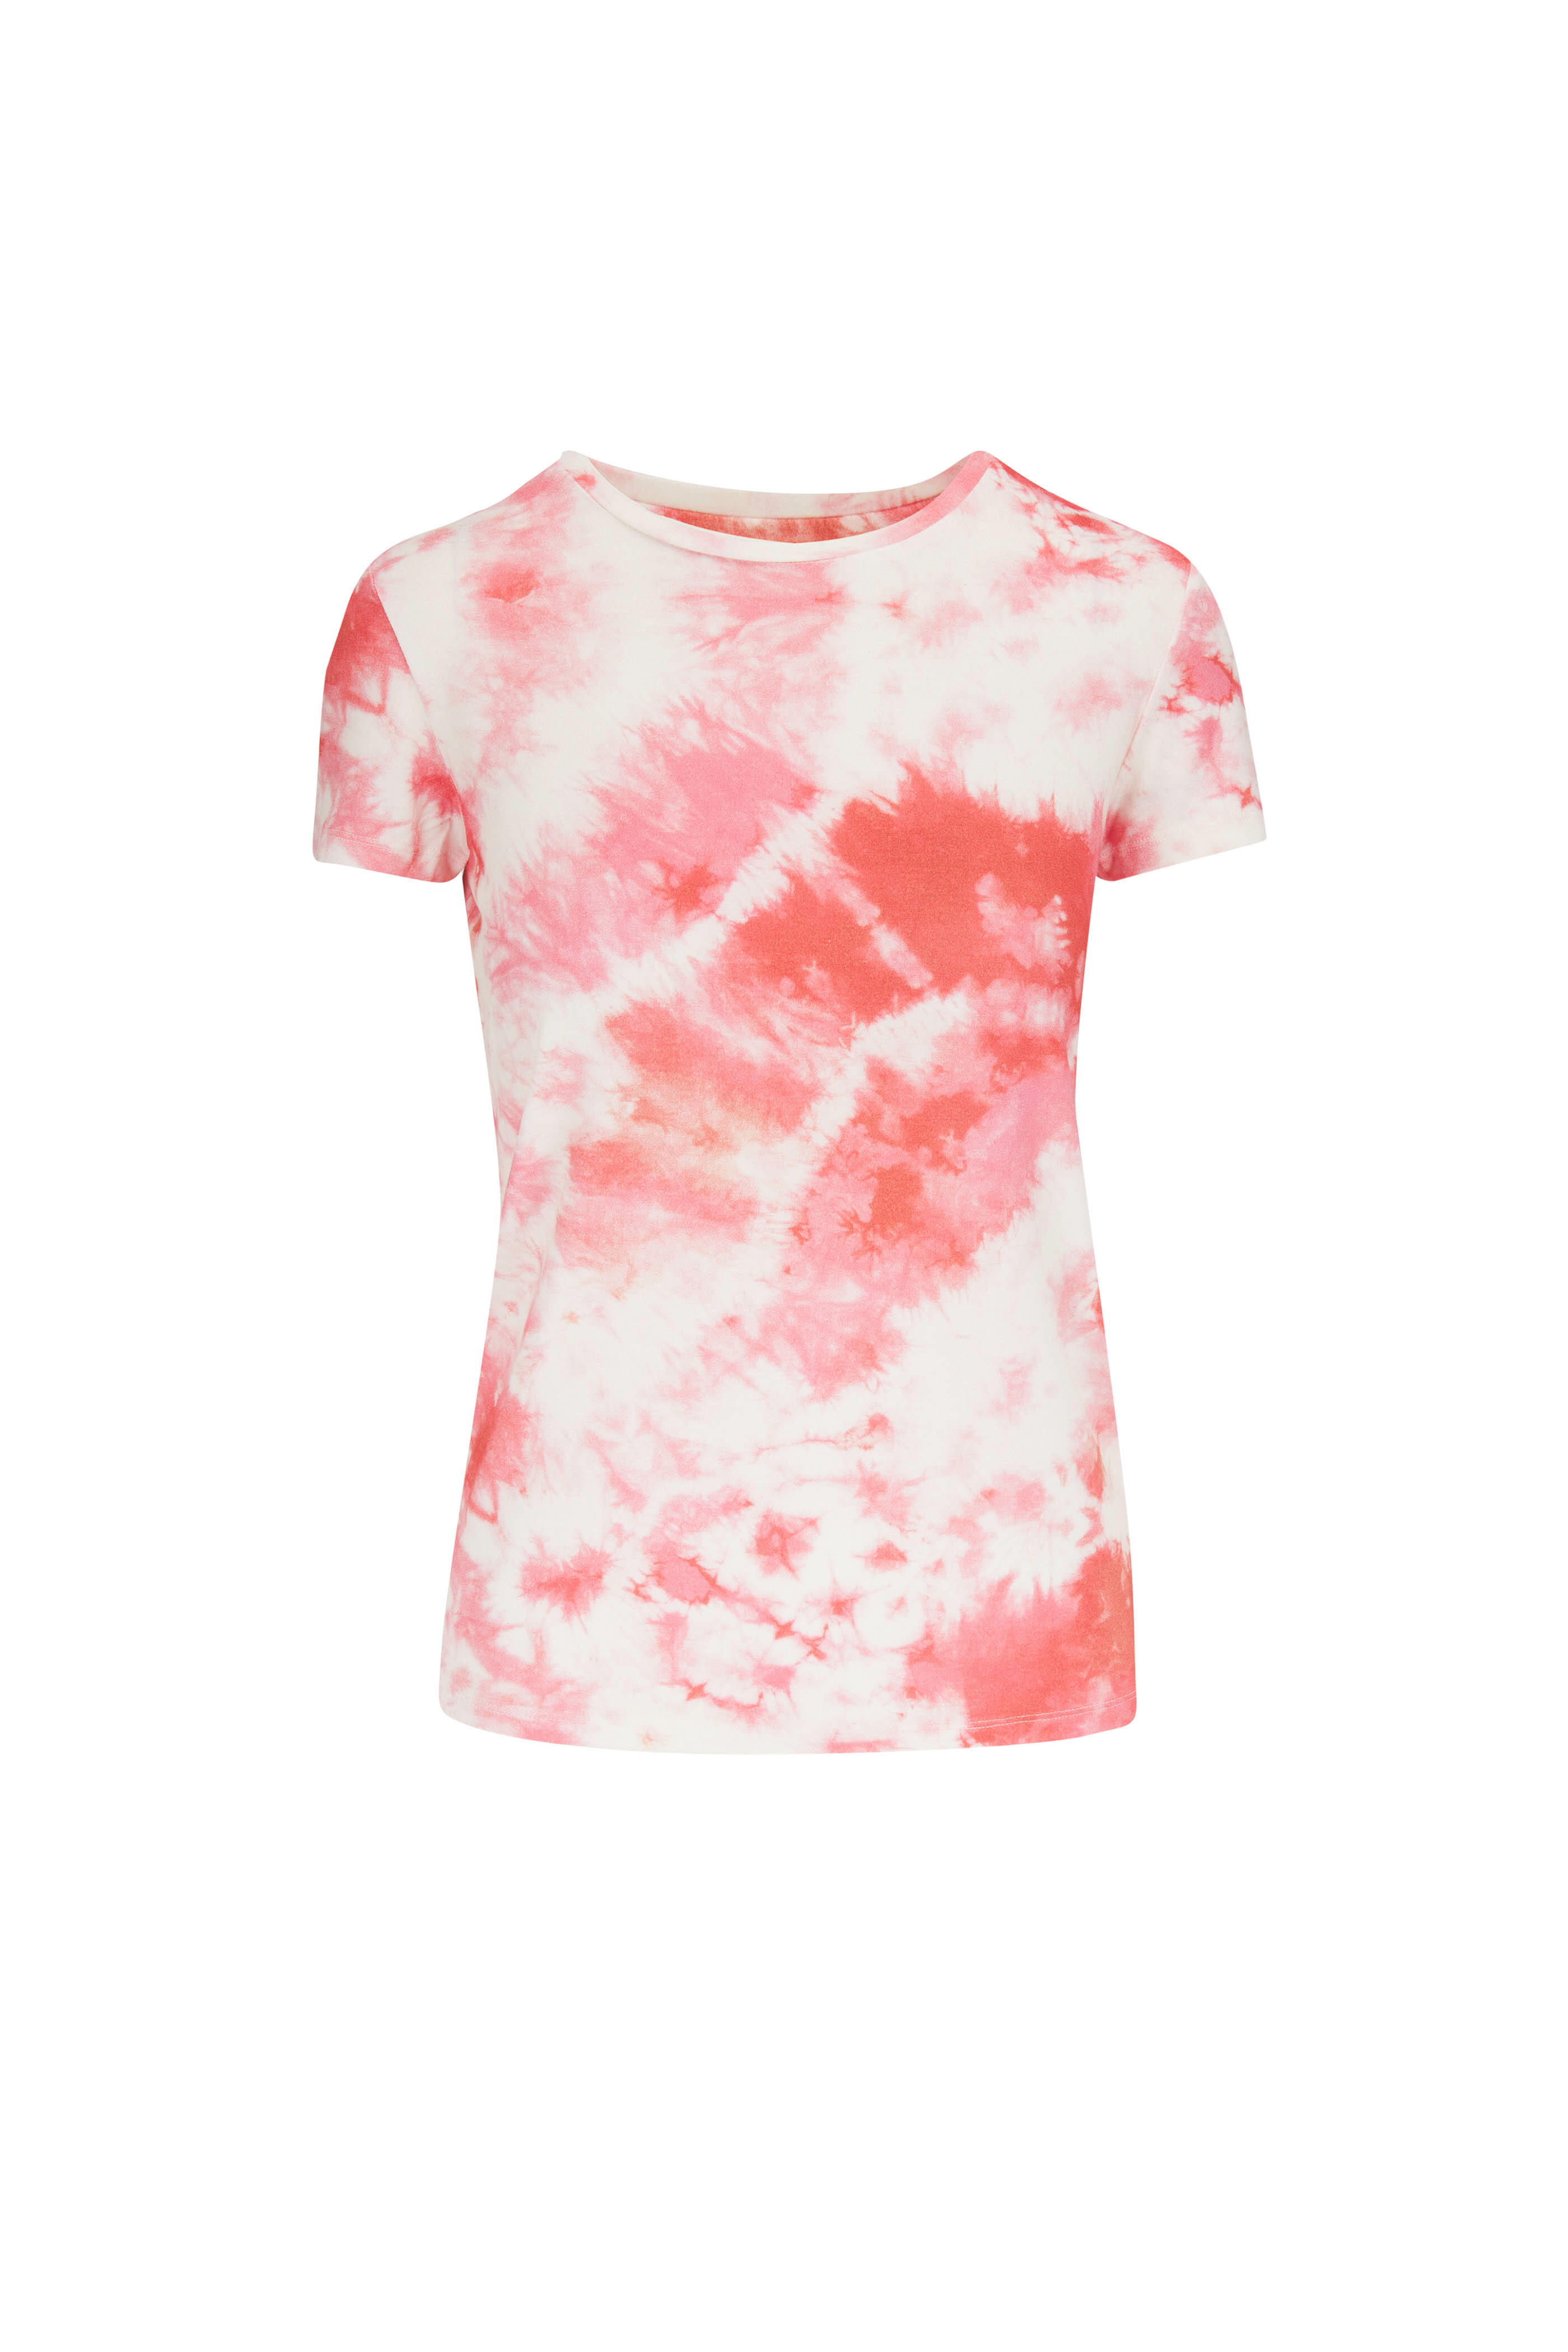 Majestic - Pink Tie-Dye Soft Touch Crewneck T-Shirt